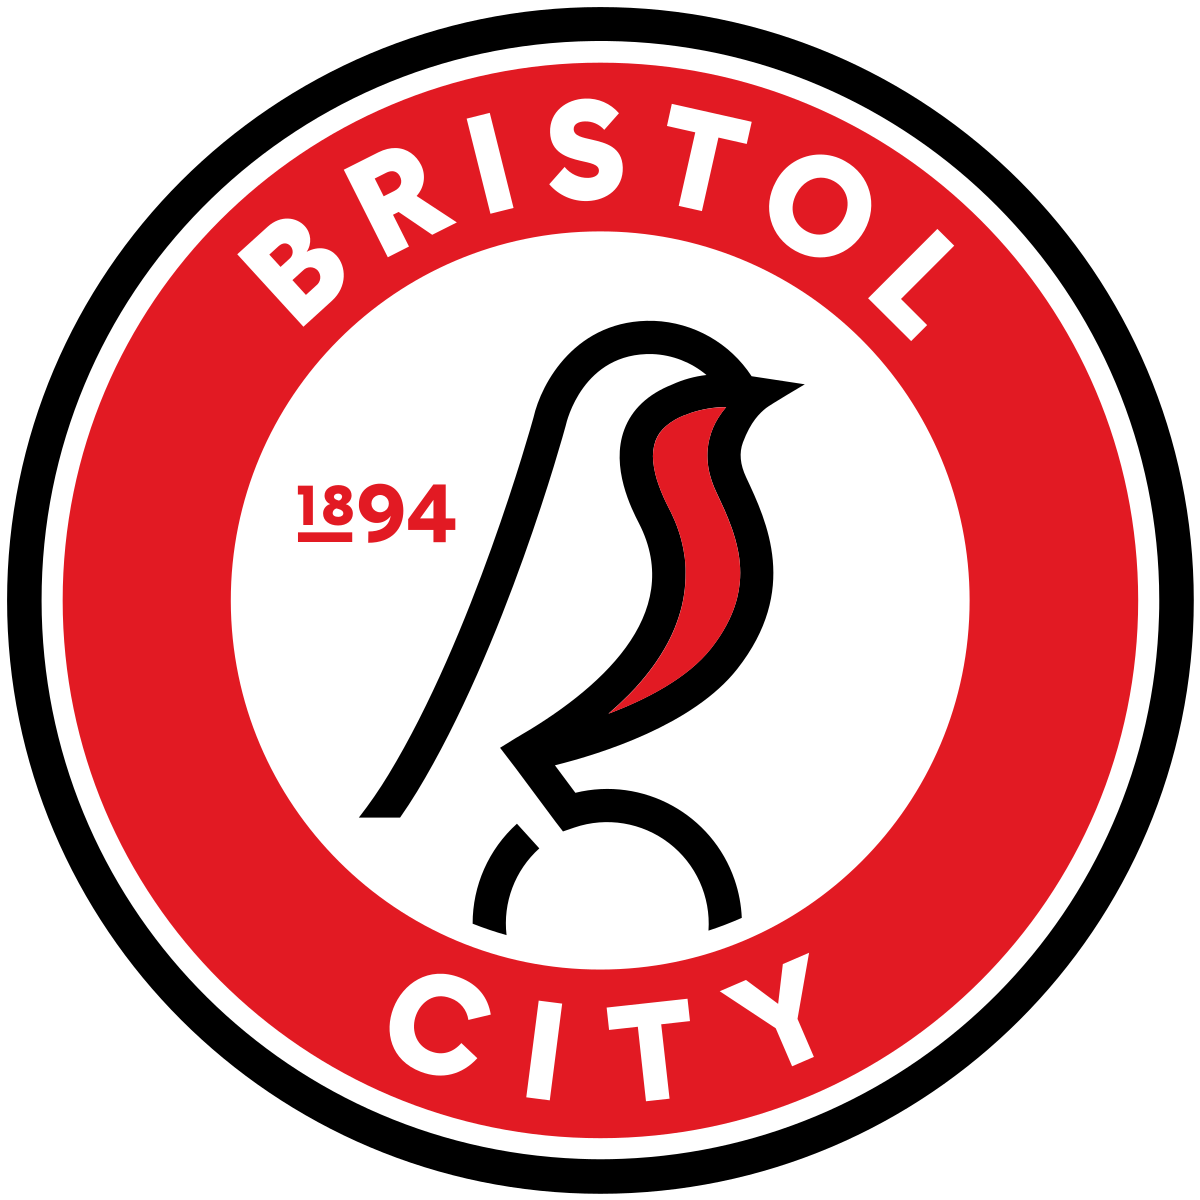 Bristol City v Huddersfield Town - Hospitality